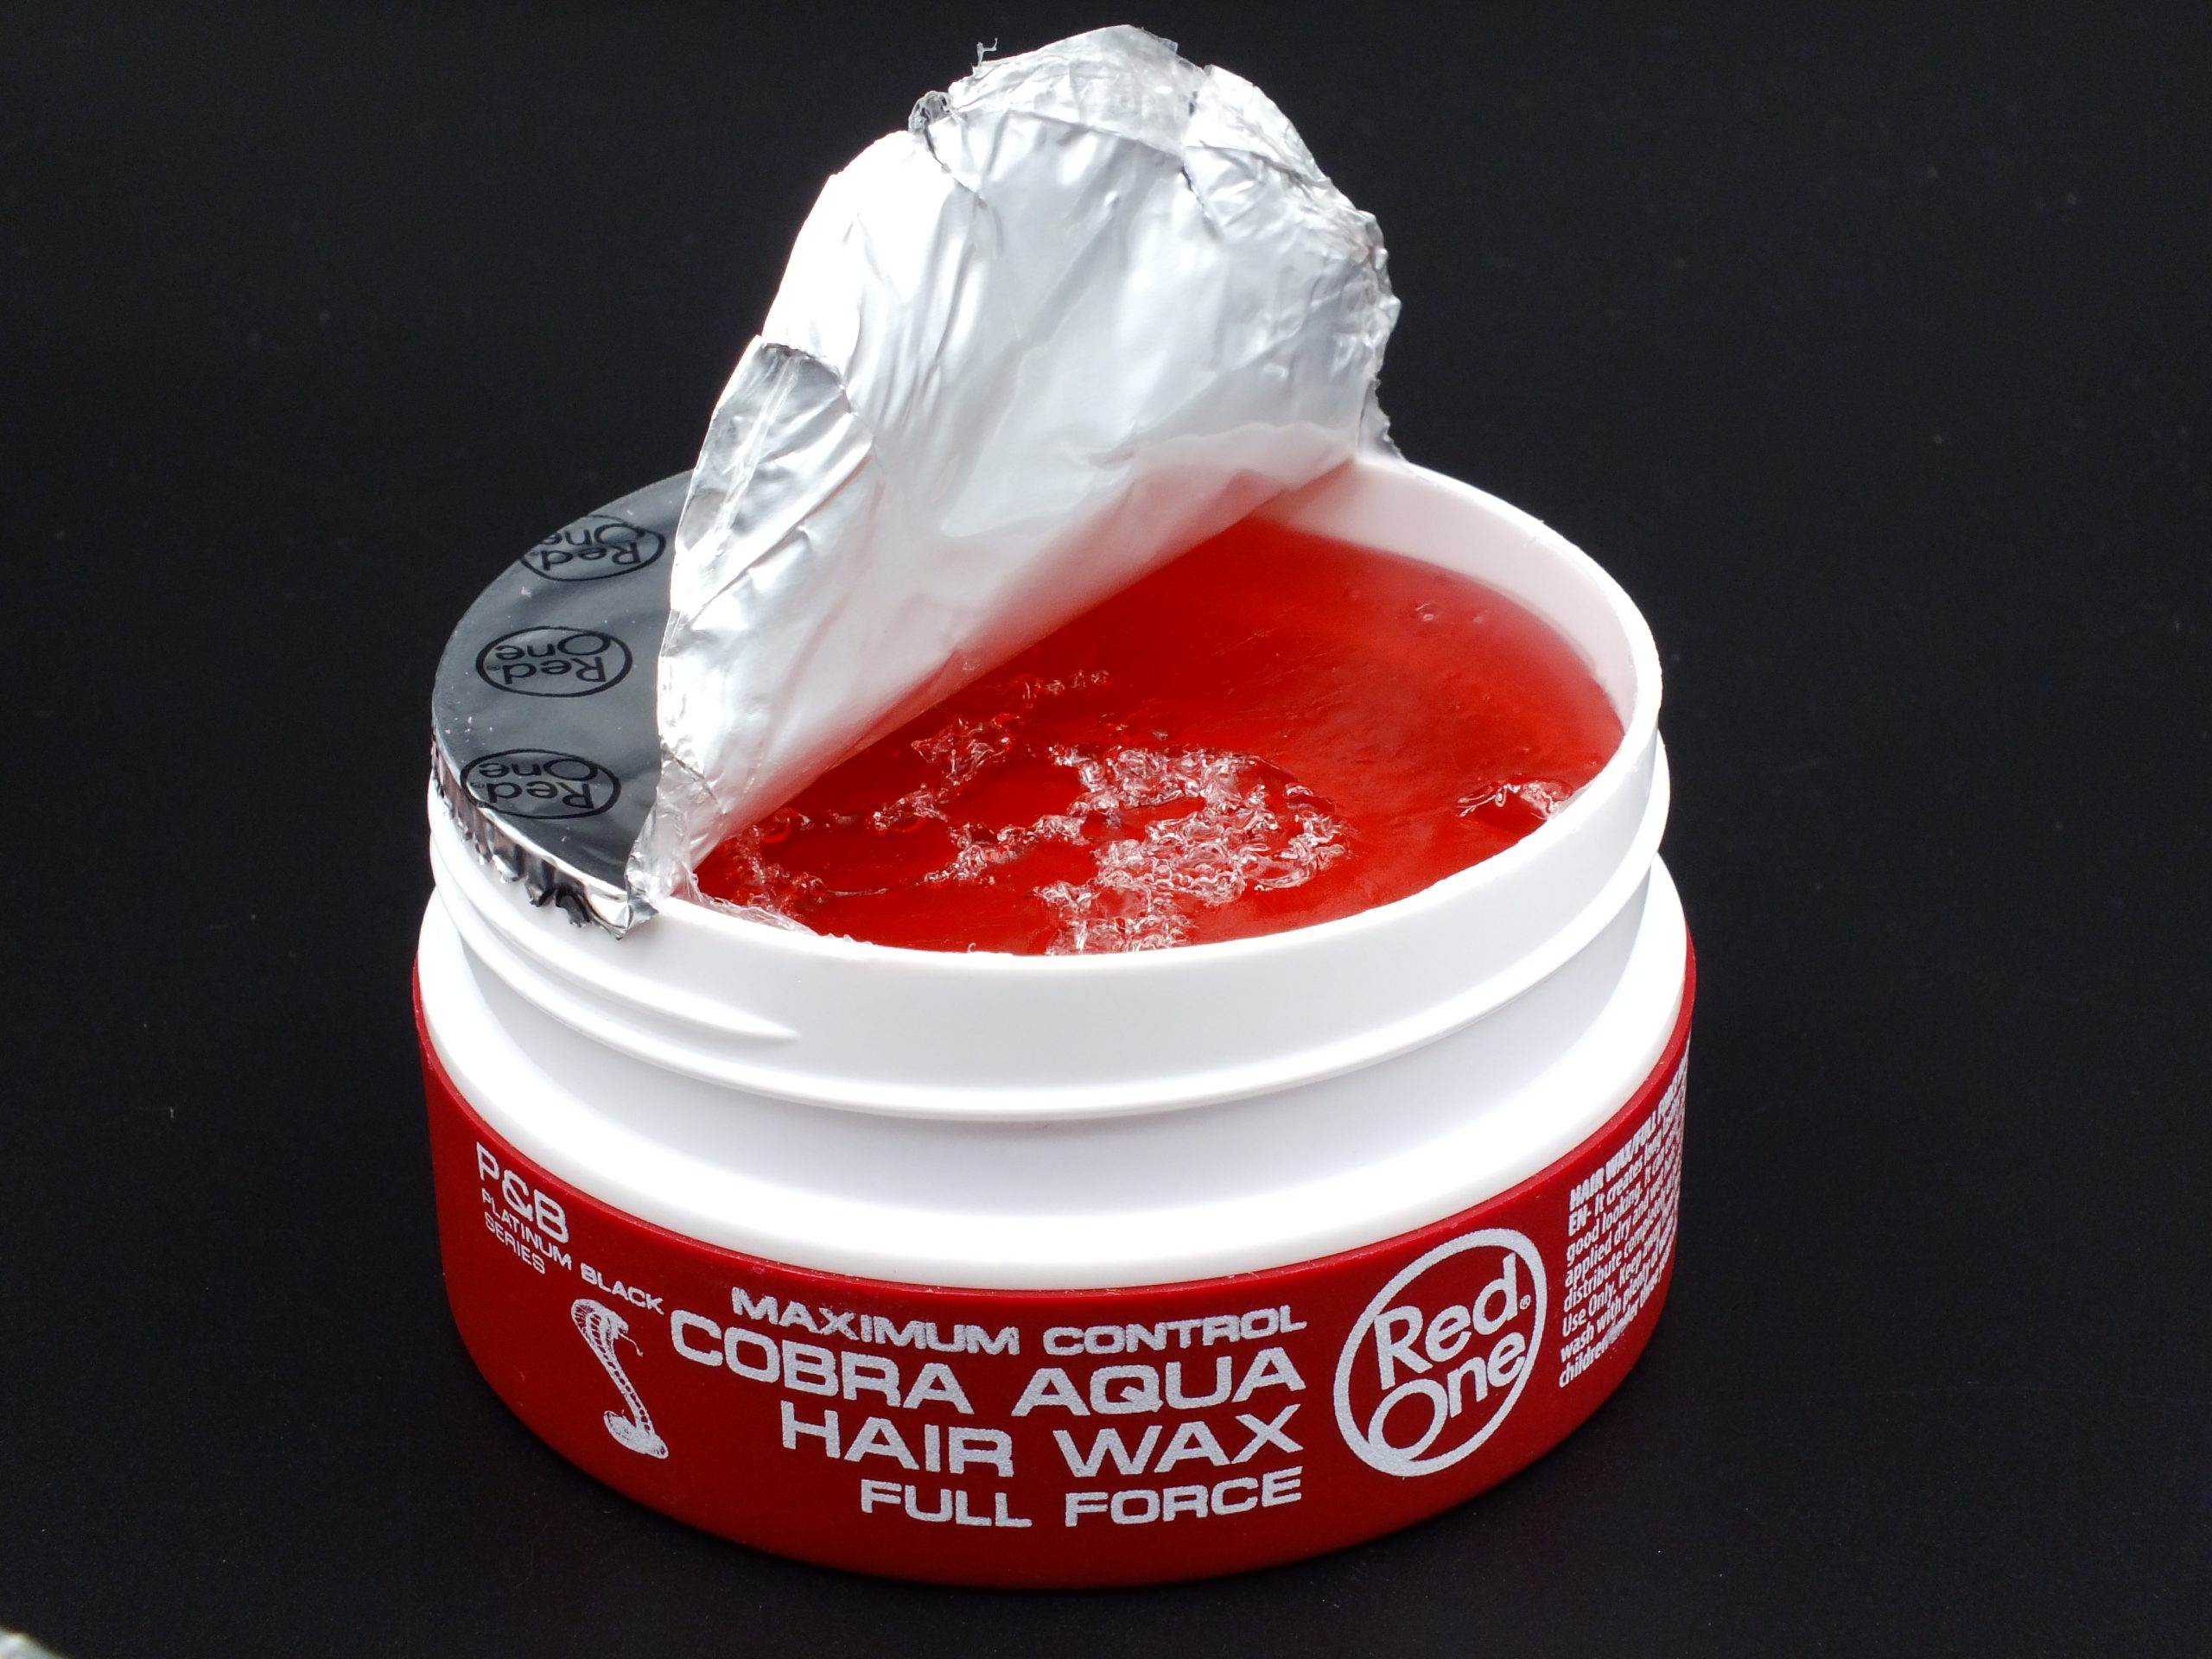 Red One Maximum Control Red Aqua Full Force Hair Wax 5oz